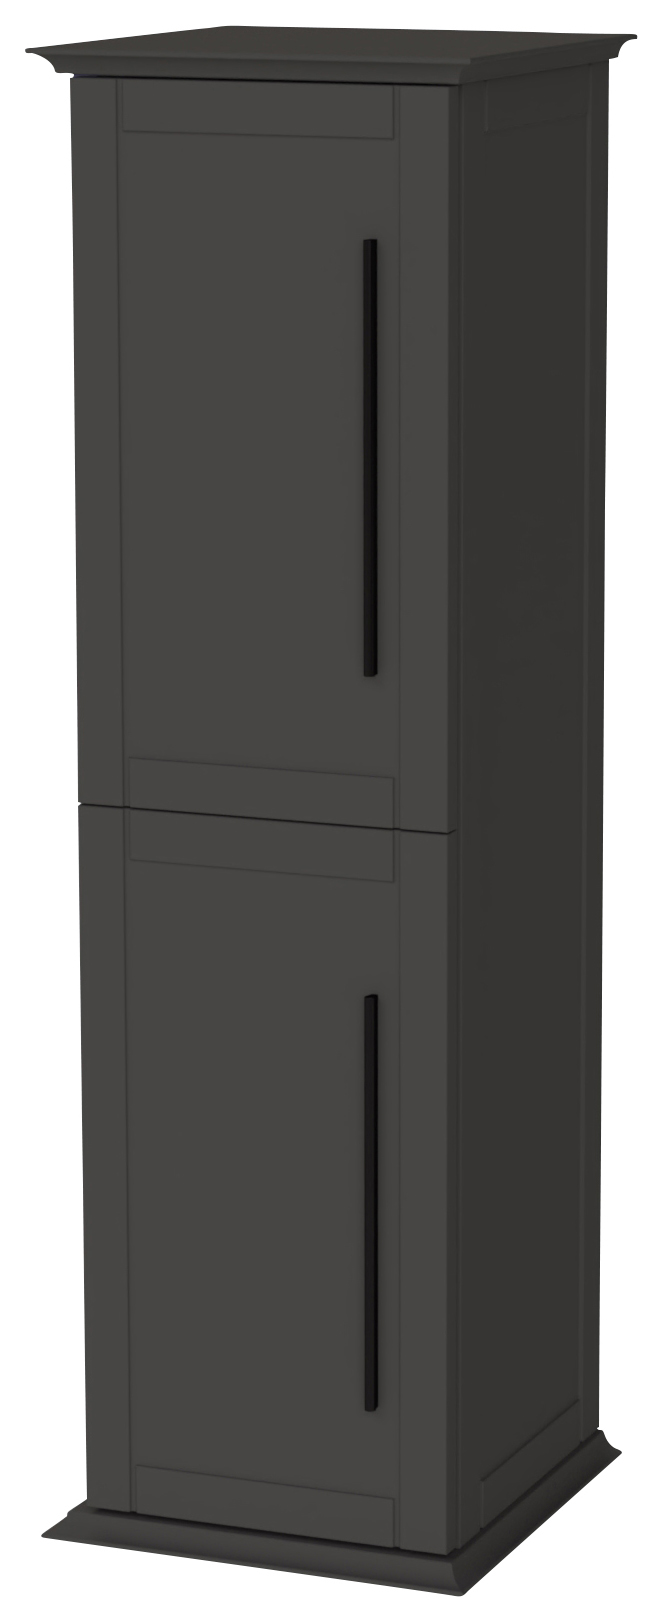 Duarti by Calypso Kentchurch Strata Grey Wall Hung Tower with Black Handles - 340mm